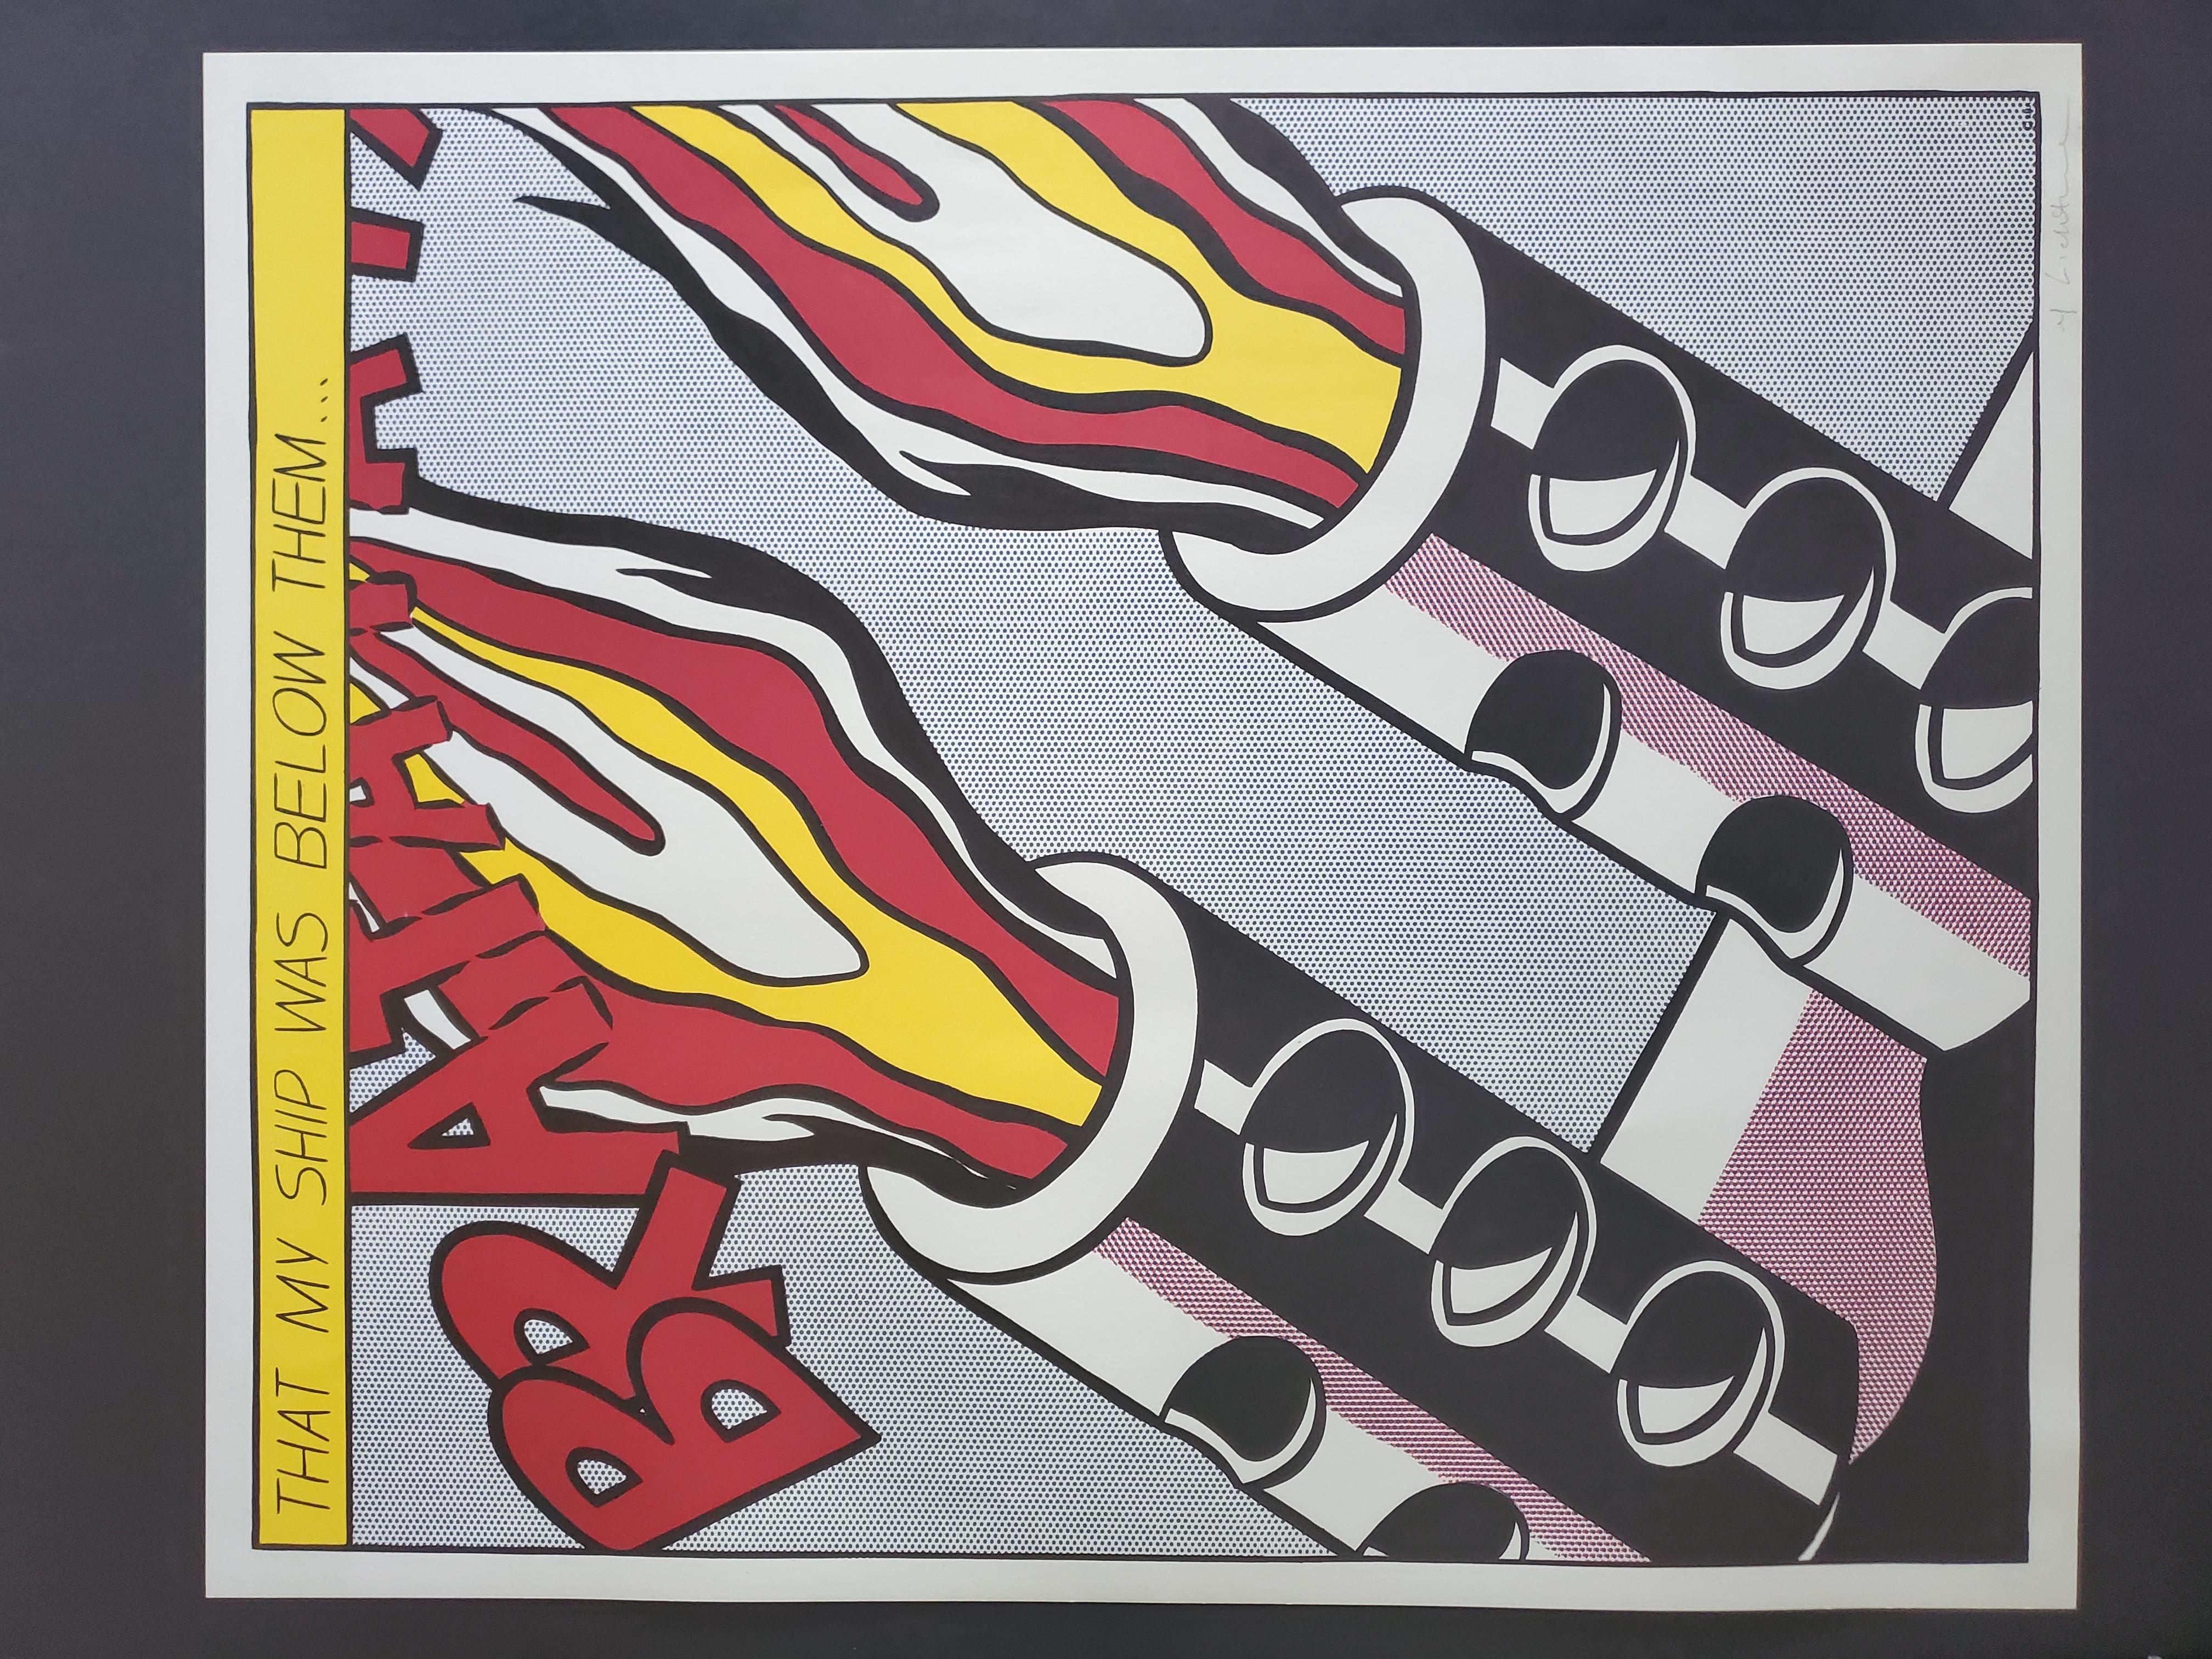 Ensemble de 3 pièces « AS I OPENED FIRE » de ROY LICHTENSTEIN, SIGNÉ (RIGHT PANEL) 1966 - Print de Roy Lichtenstein